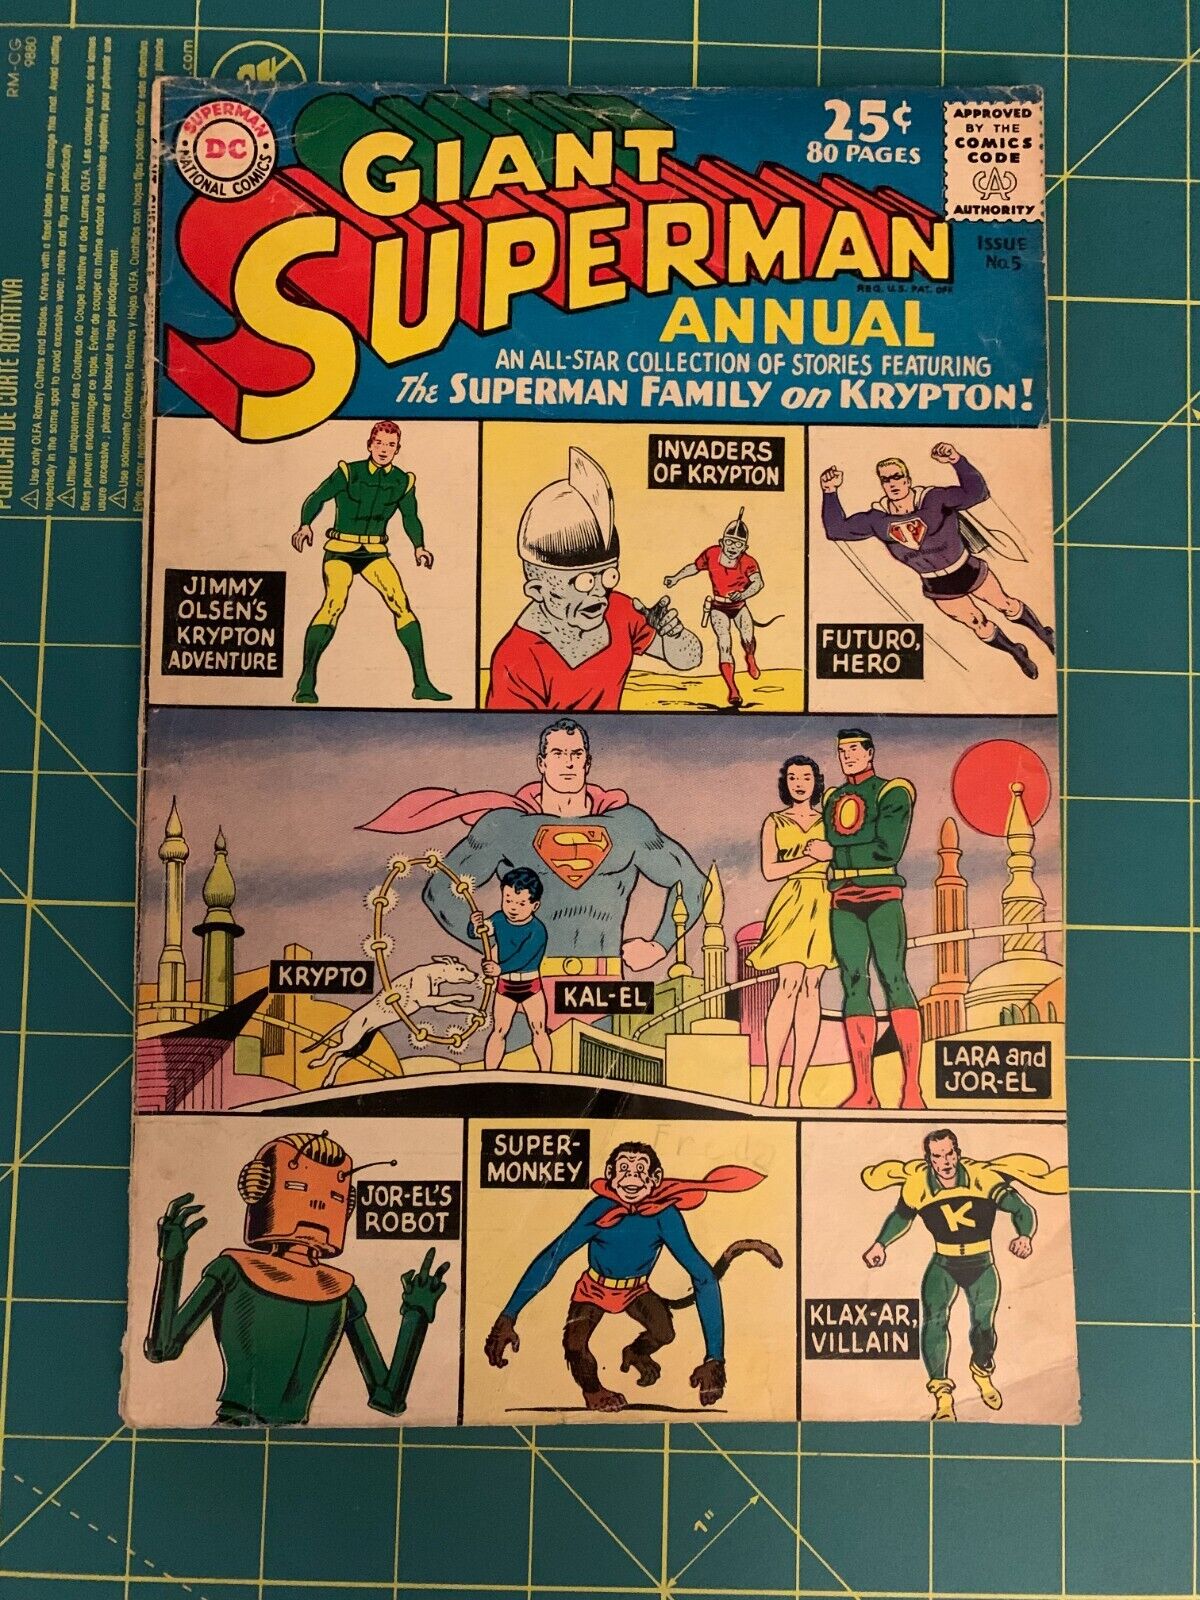 Giant Superman Annual #5 - 1962 - Vol.1 - (8941)